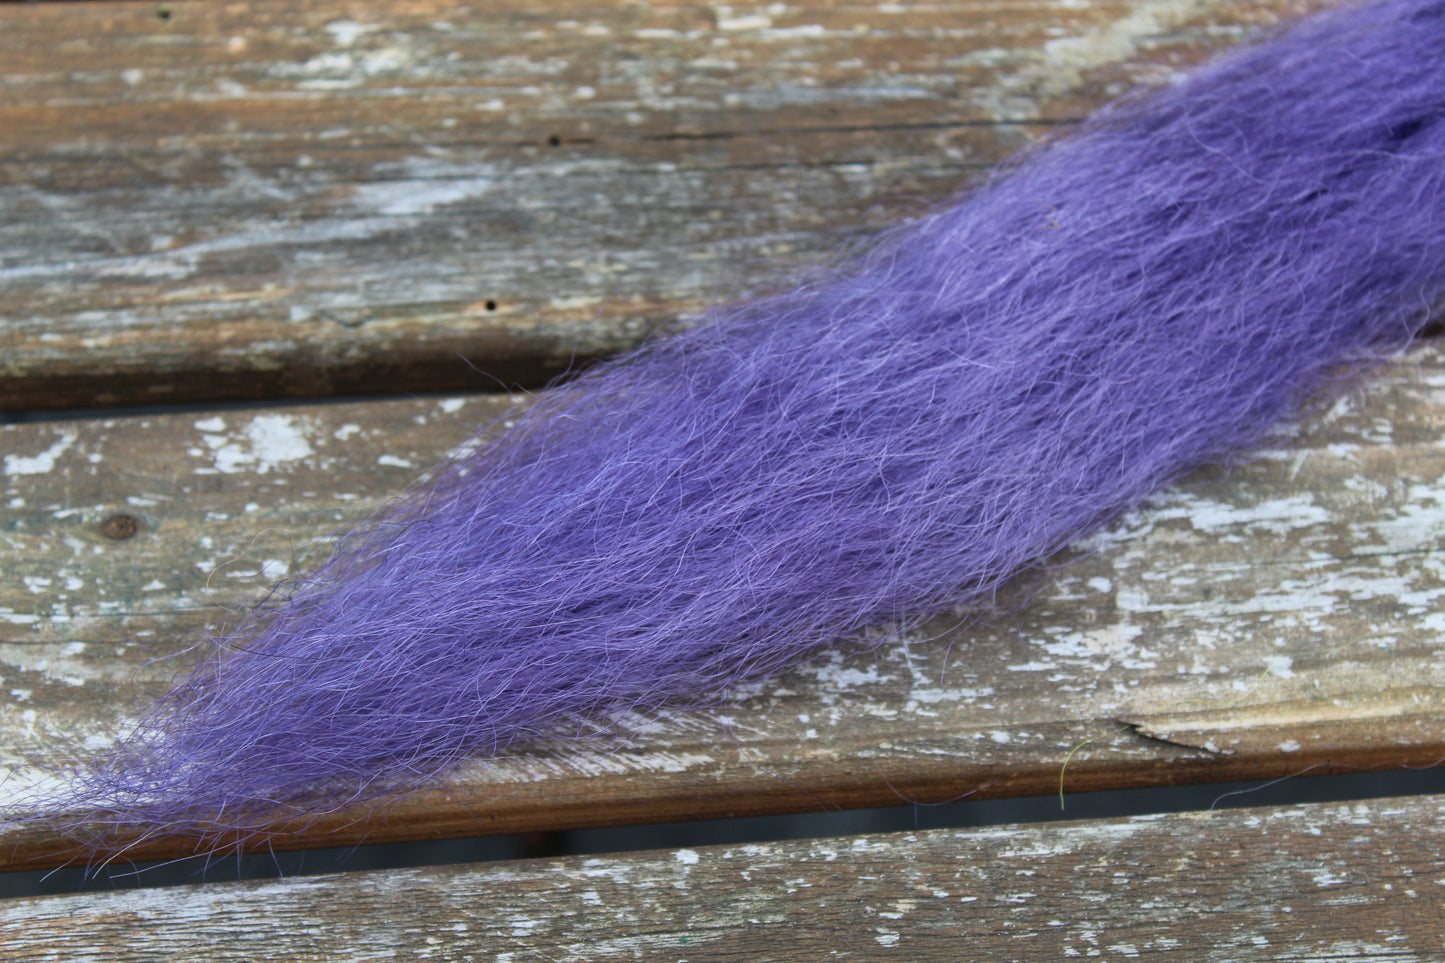 Yakety Yak hair - Deep purple